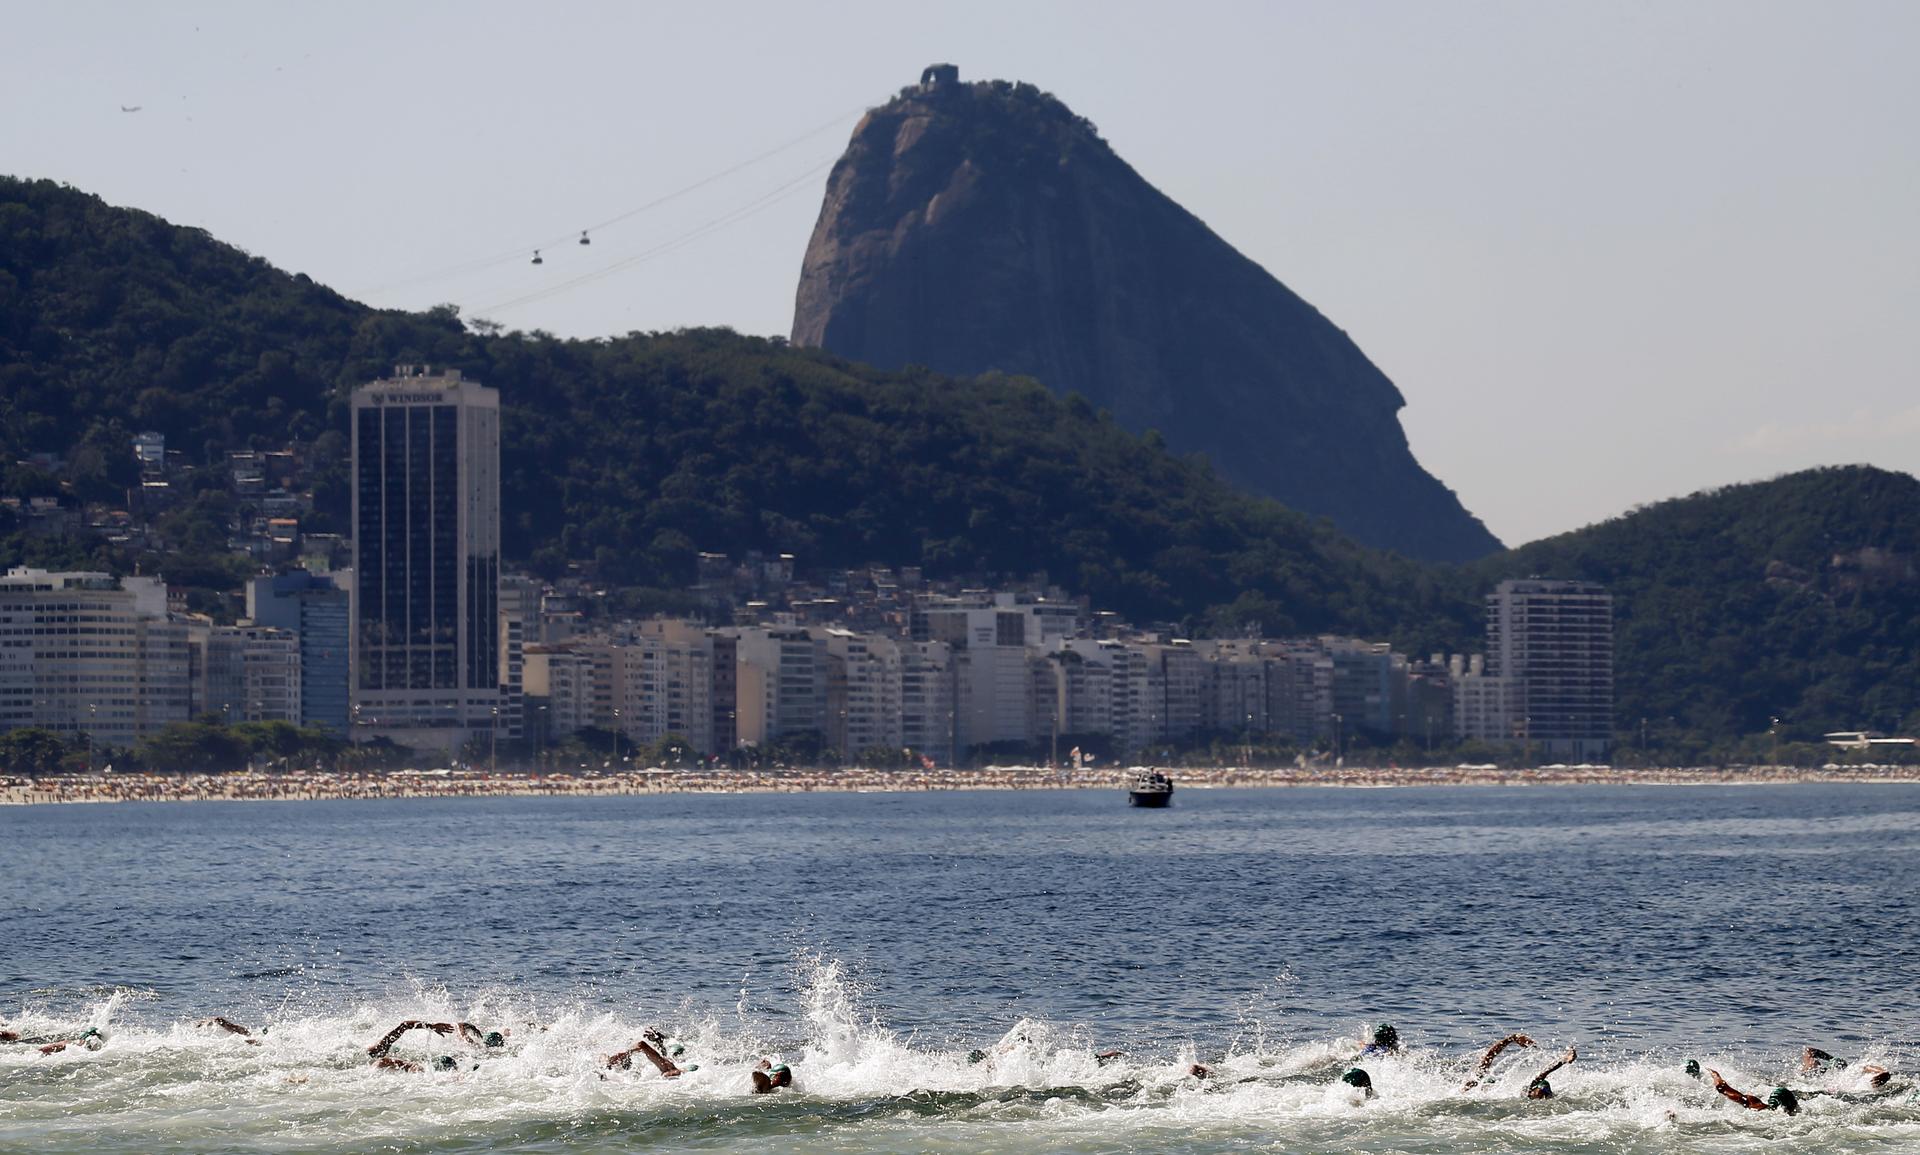 Competitors swim on Copacabana beach in Rio de Janeiro, Brazil